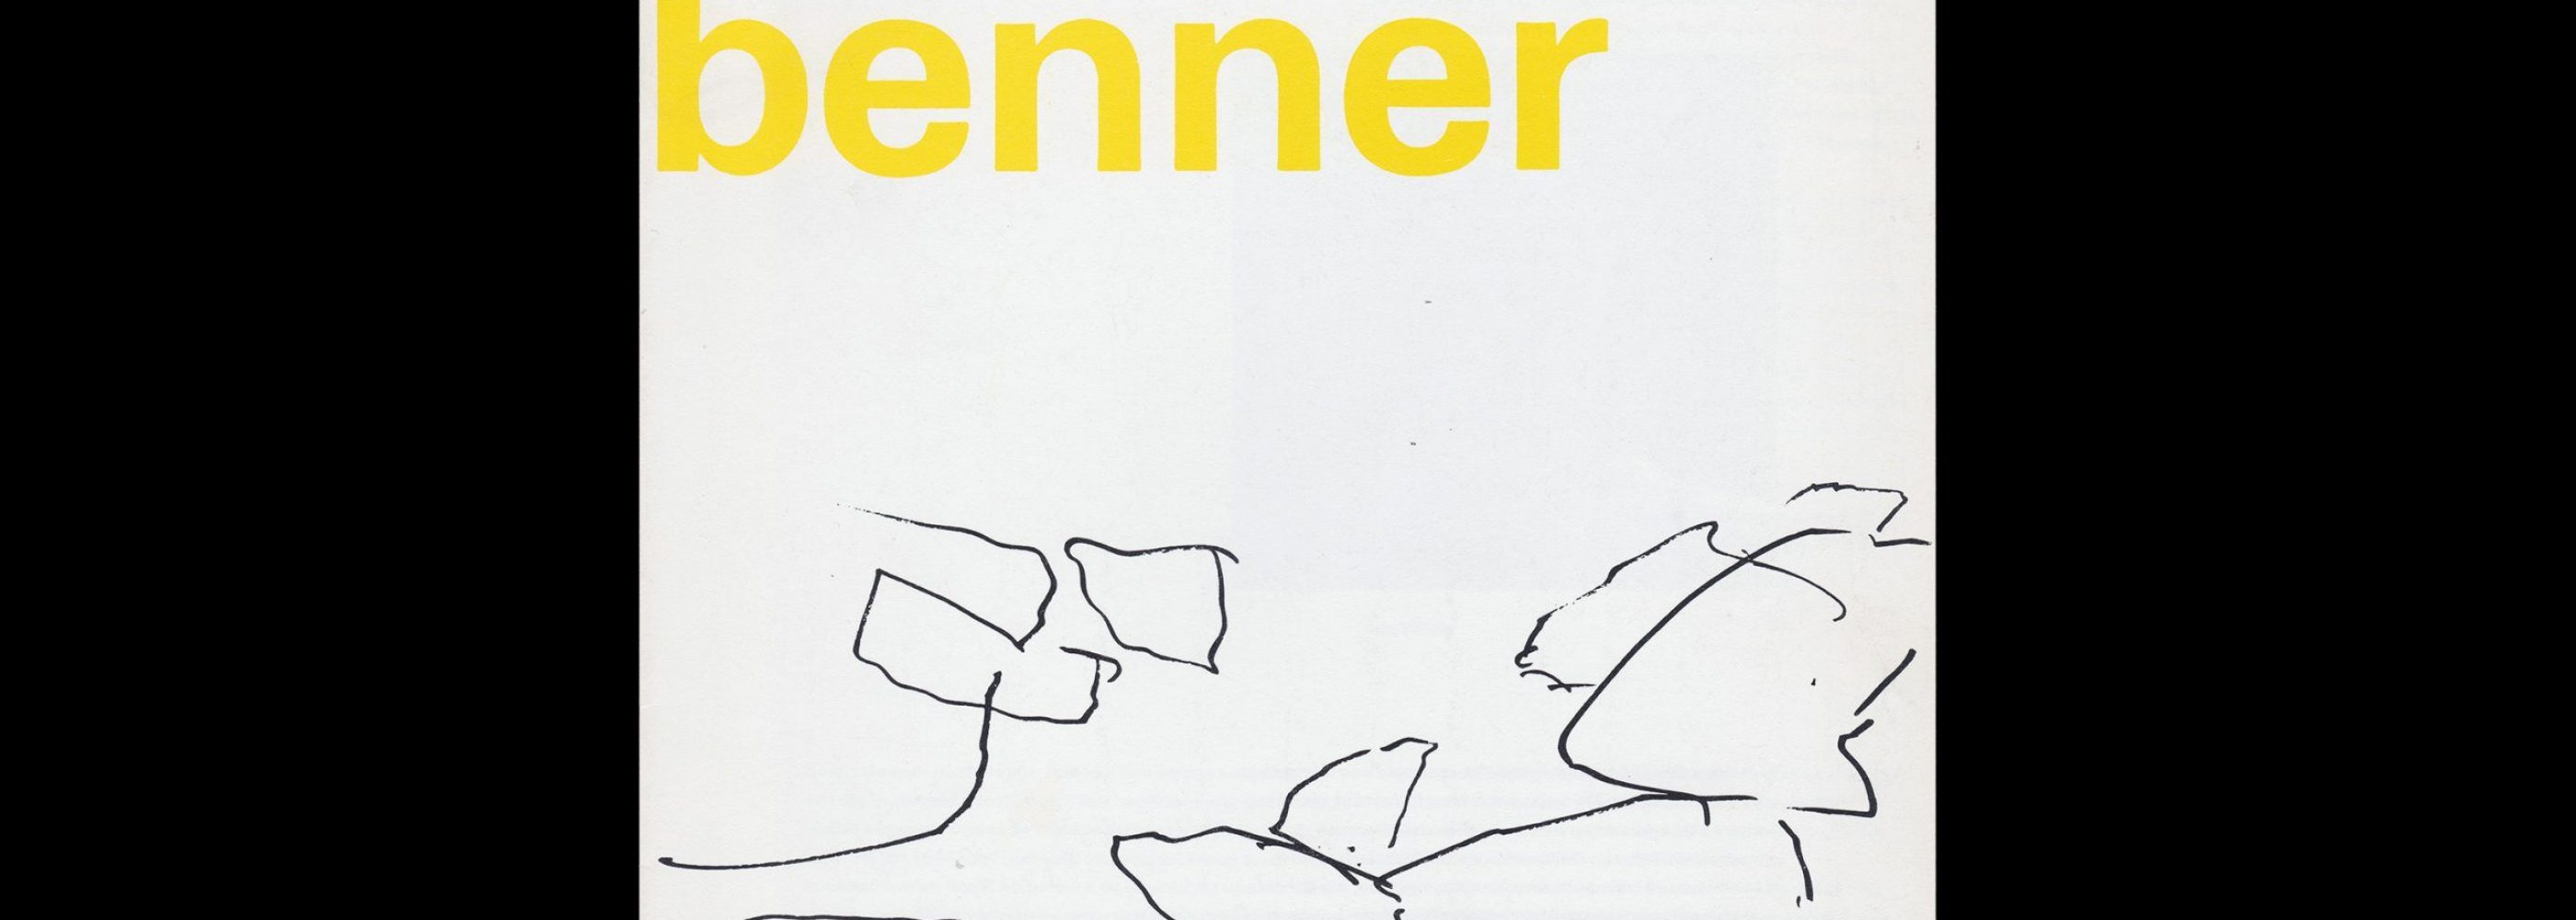 Gerrit Benner, Stedelijk Museum, Amsterdam, 1971 designed by Wim Crouwel (Total Design)